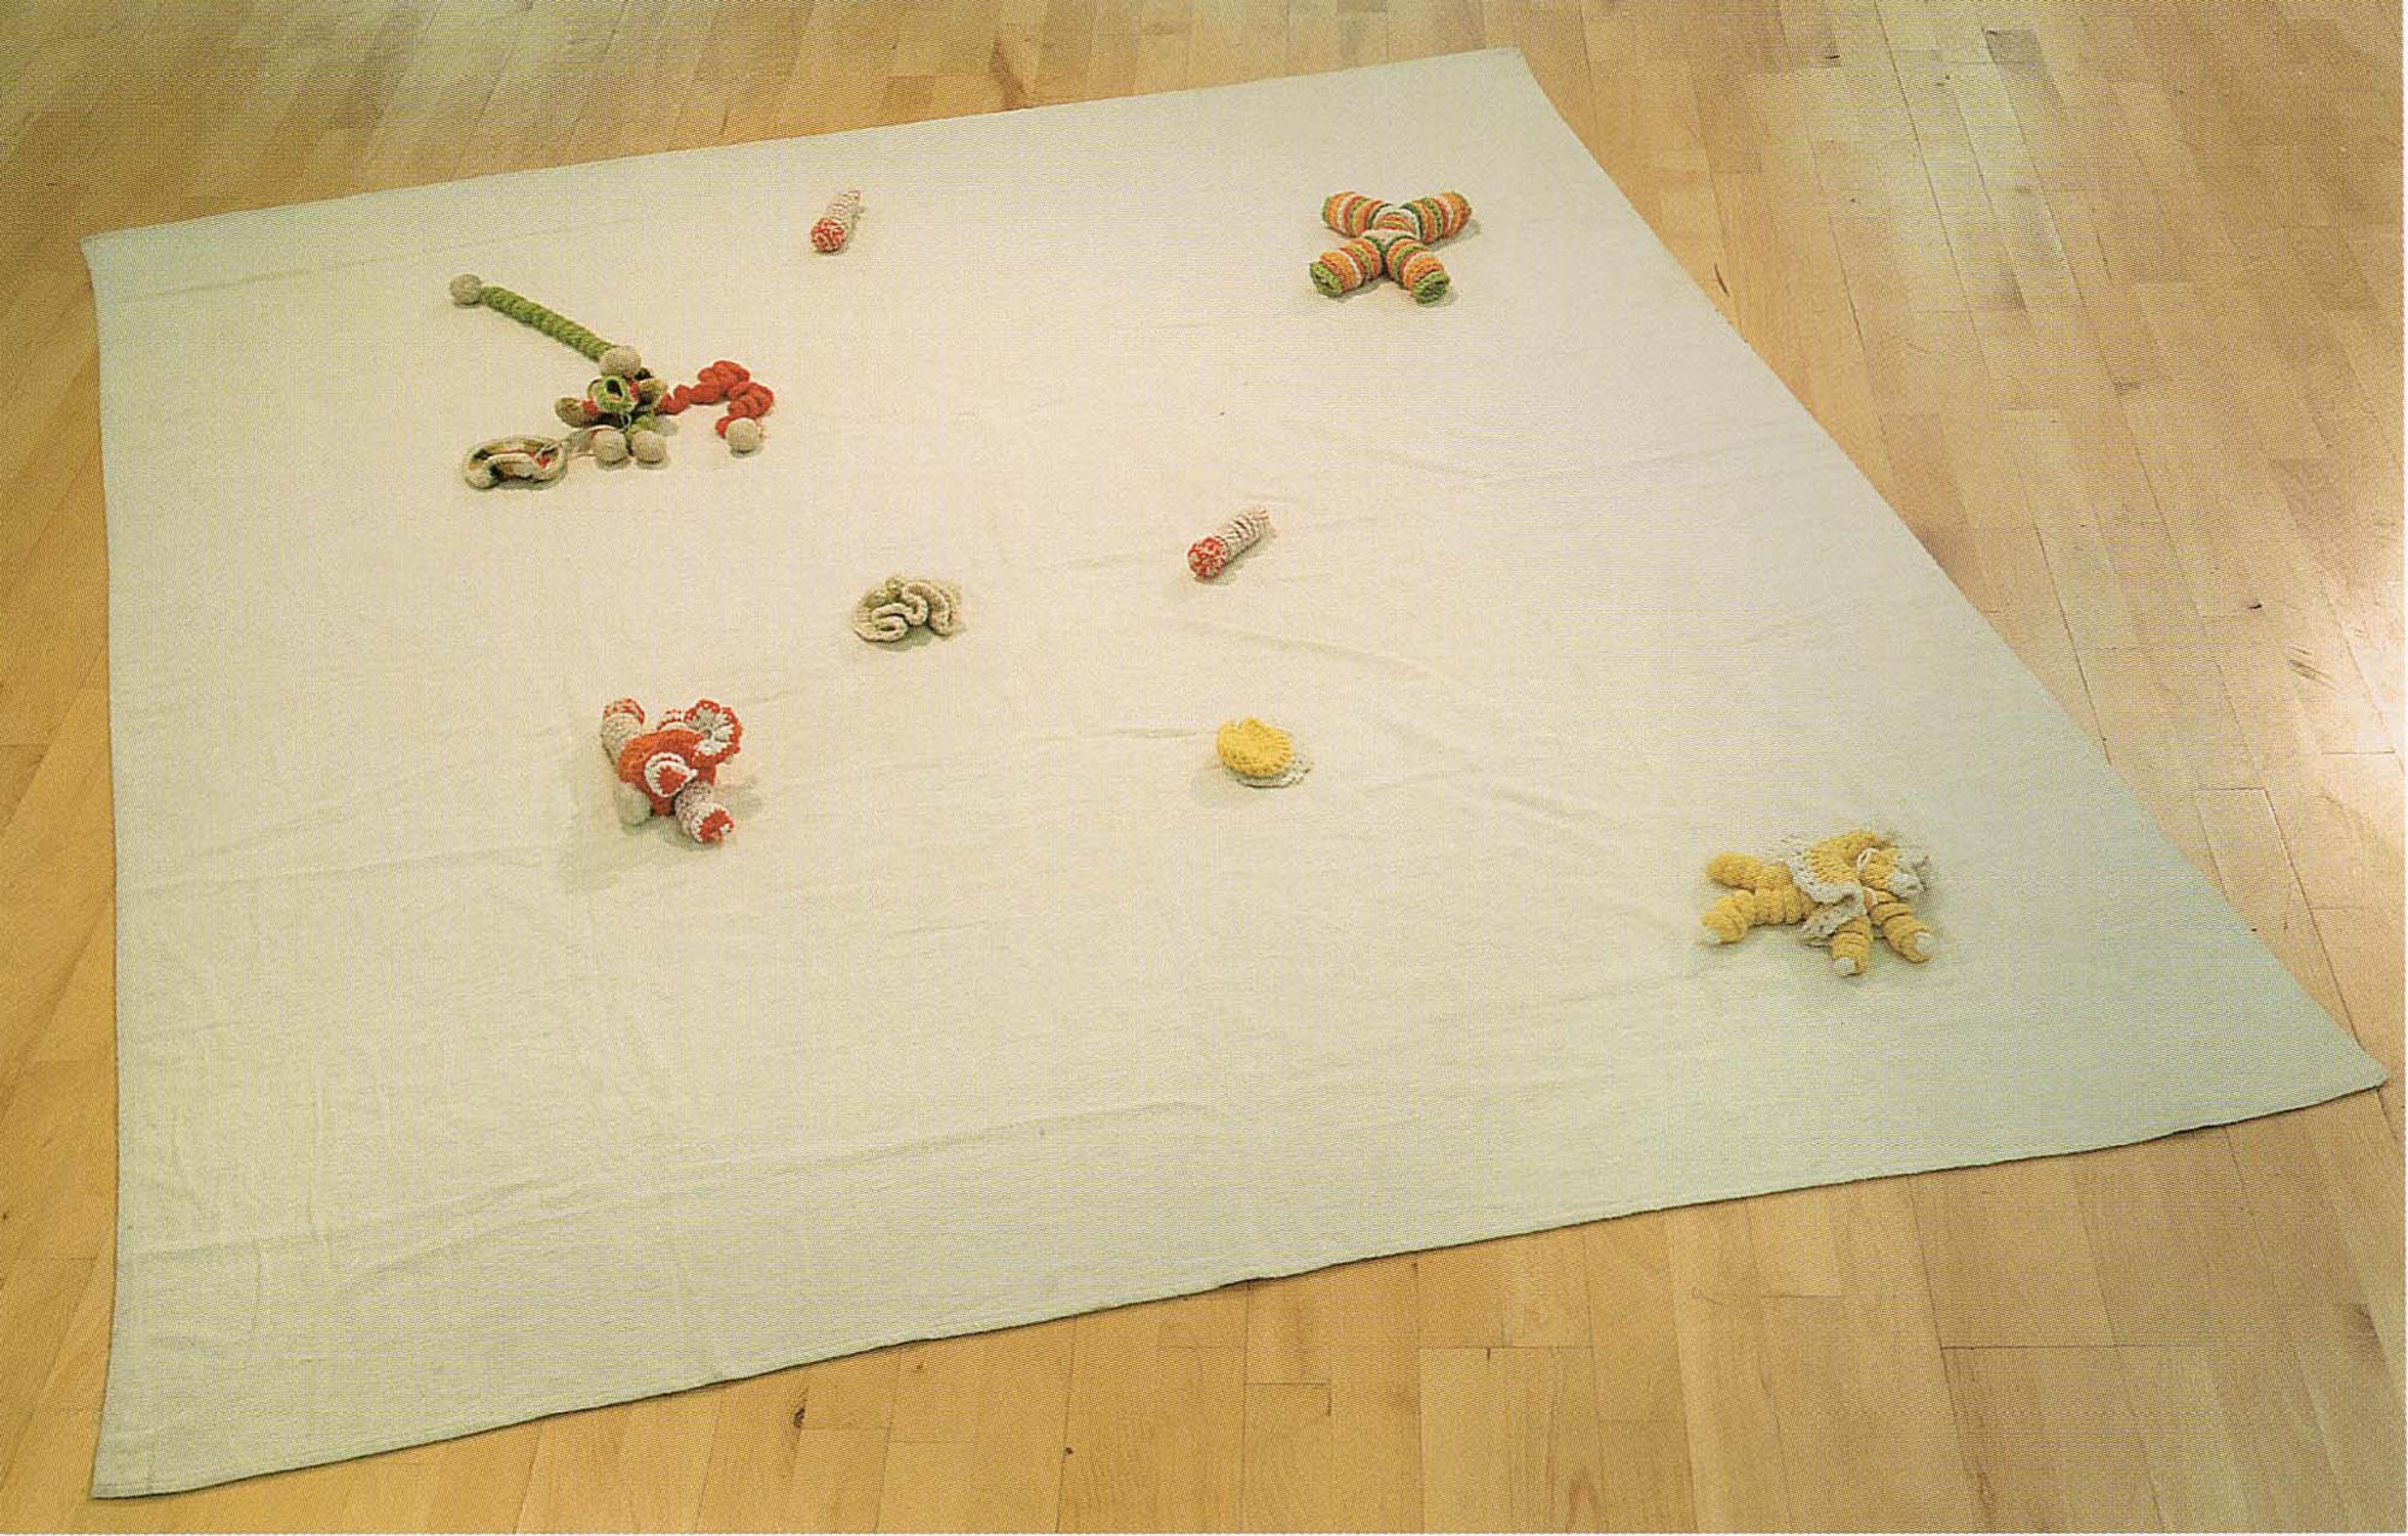 (1998) Mike Kelley, Innards, 1990, blanket with dolls sewn on, 5 x 216 x 177 cm.  